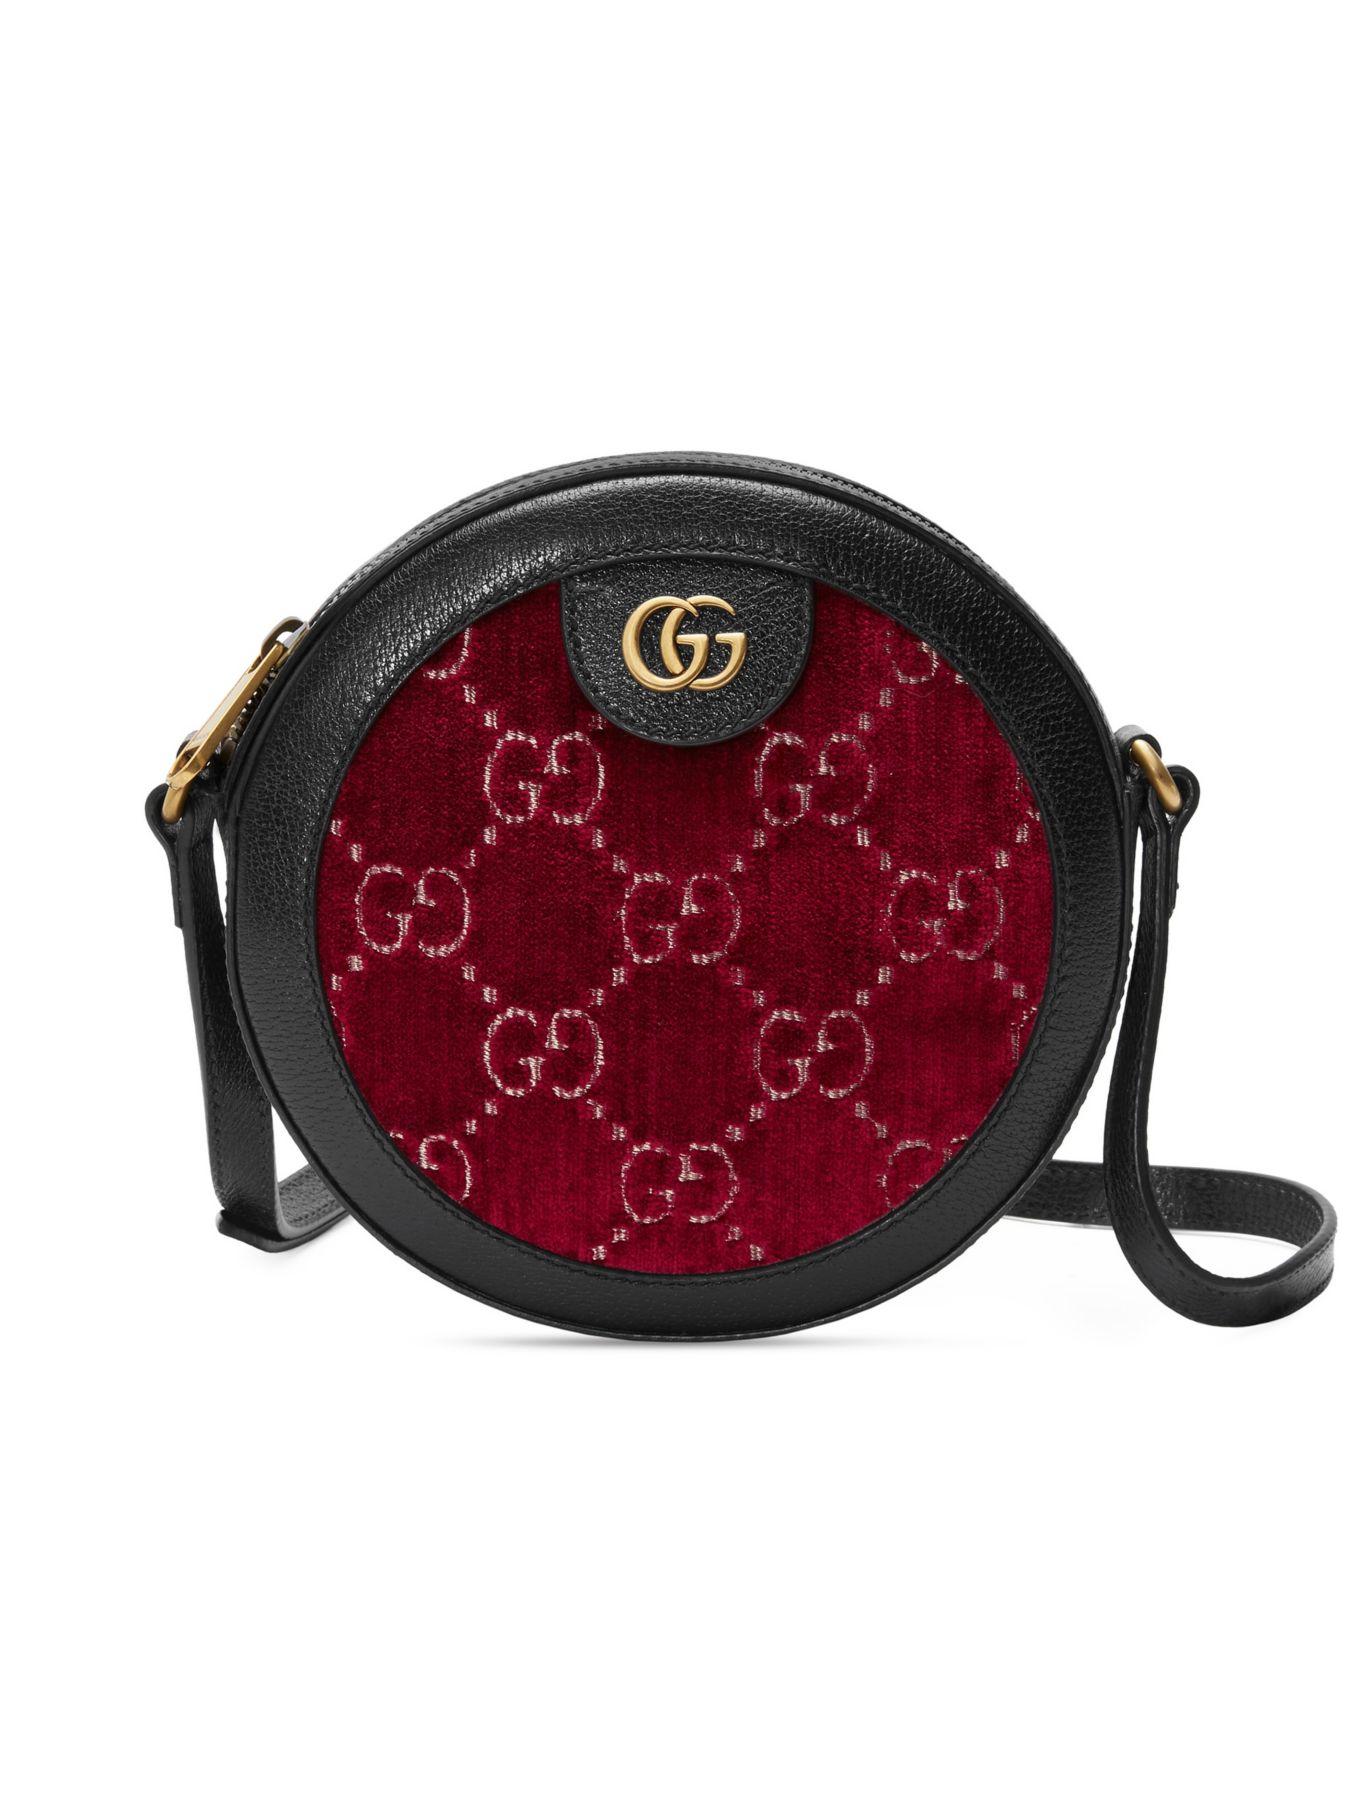 Gucci GG Velvet Round Shoulder Bag in Red - Lyst